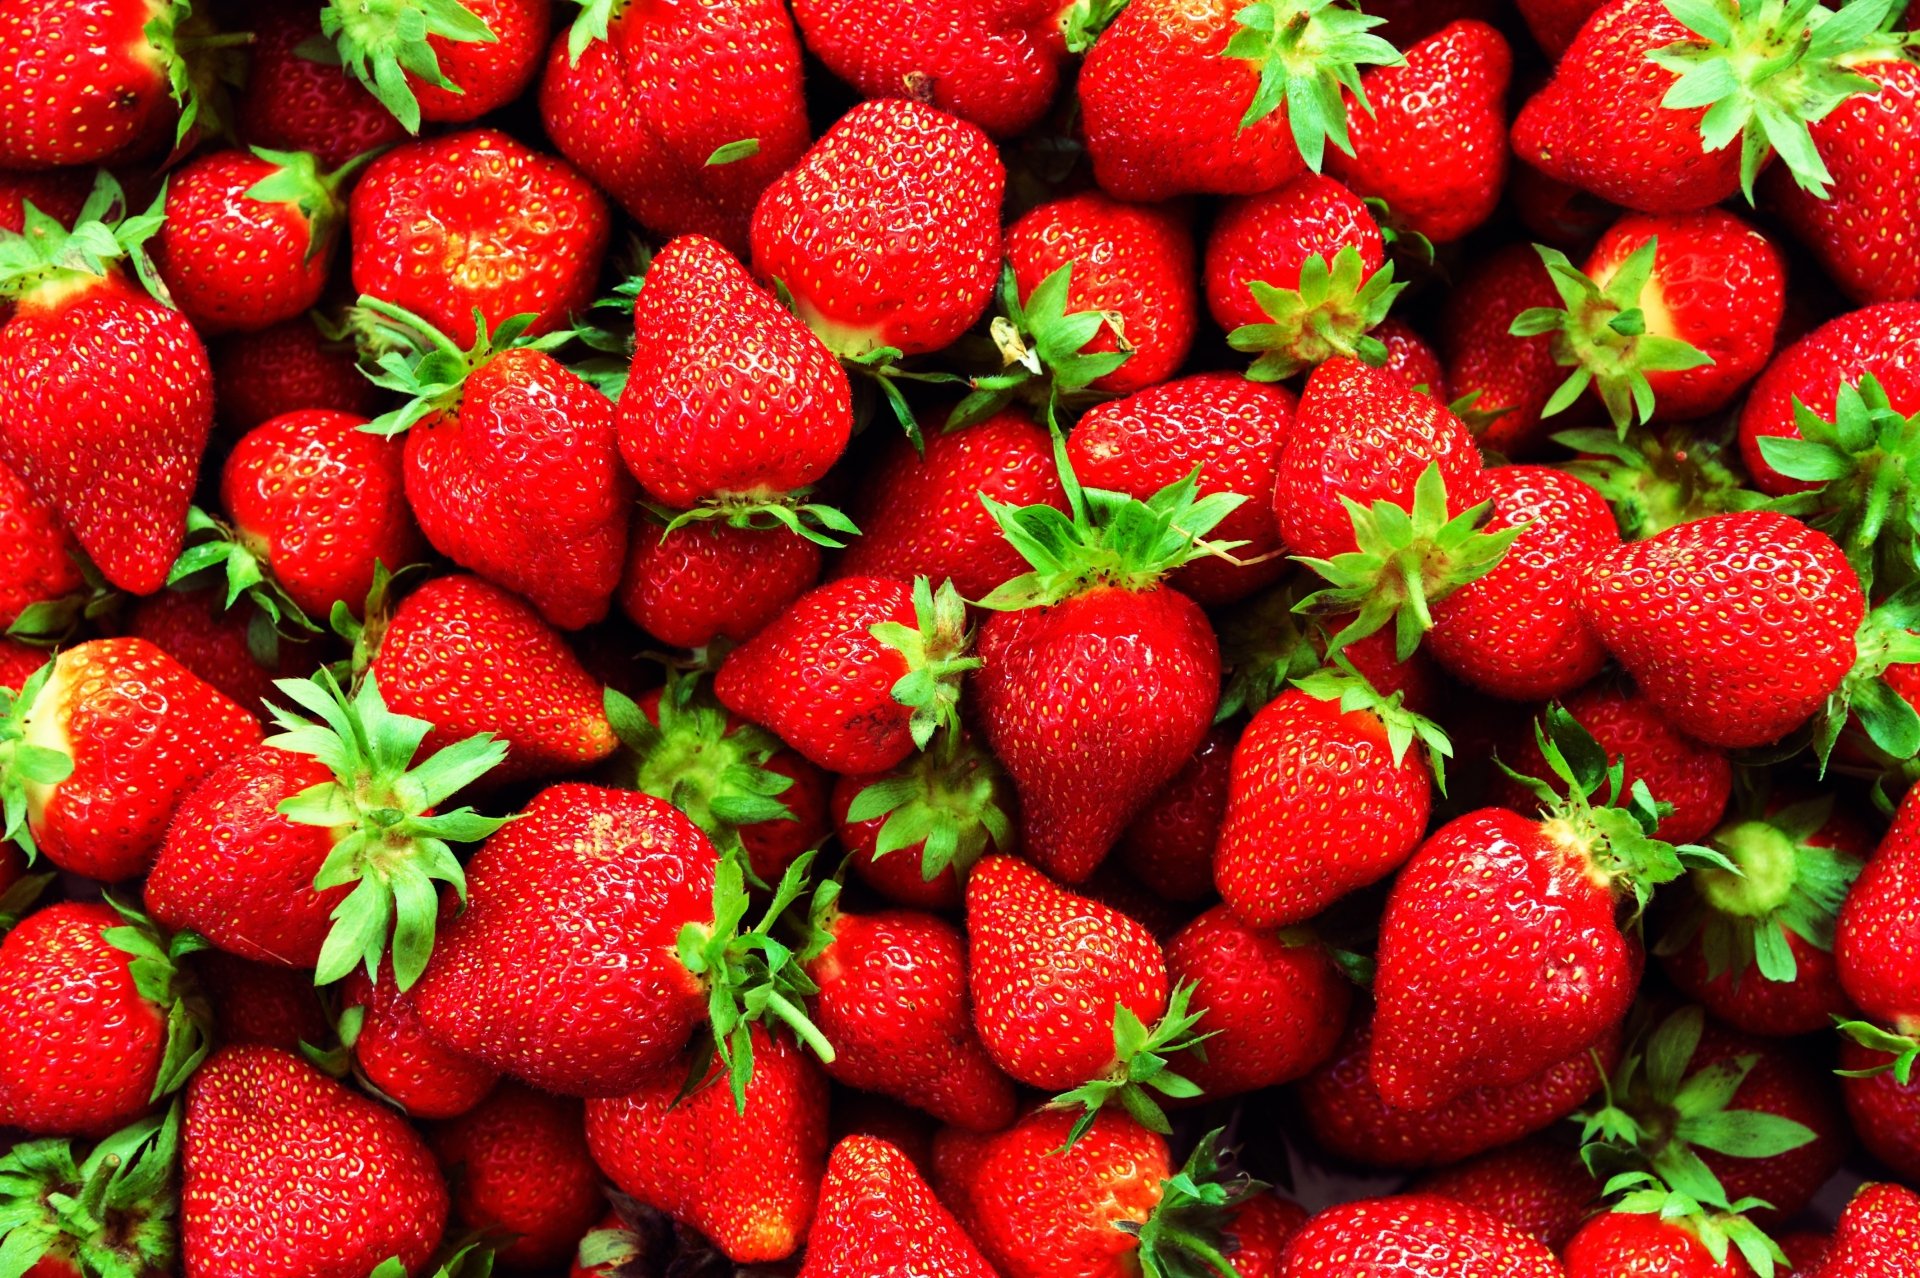 Strawberry 4k Ultra HD Wallpaper Background Image 4256x2832.